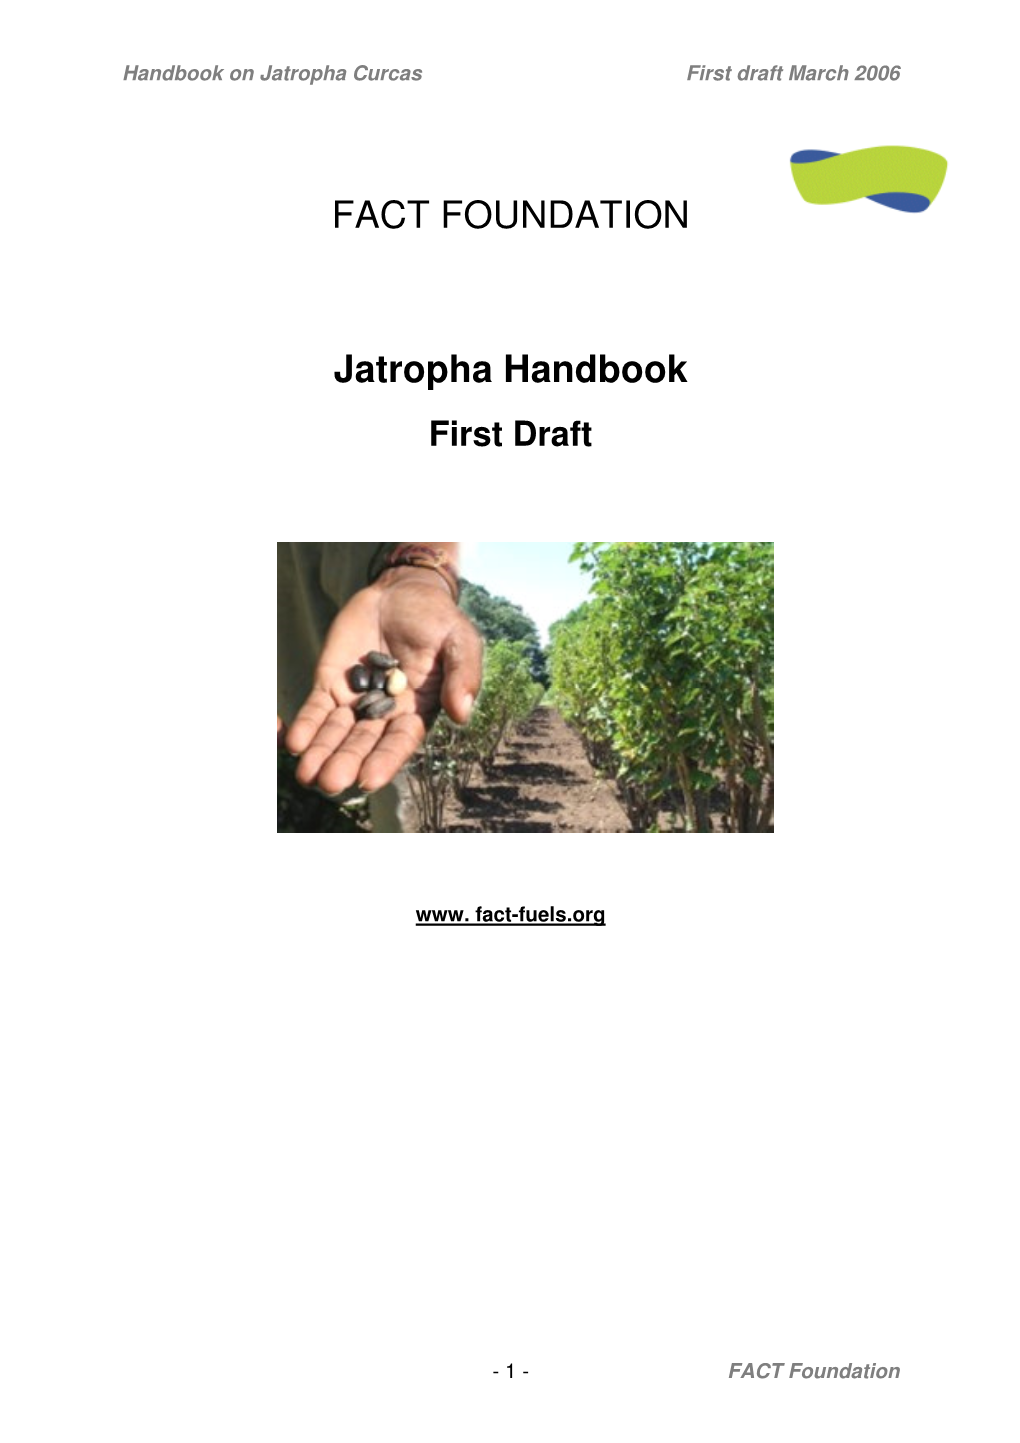 FACT FOUNDATION Jatropha Handbook